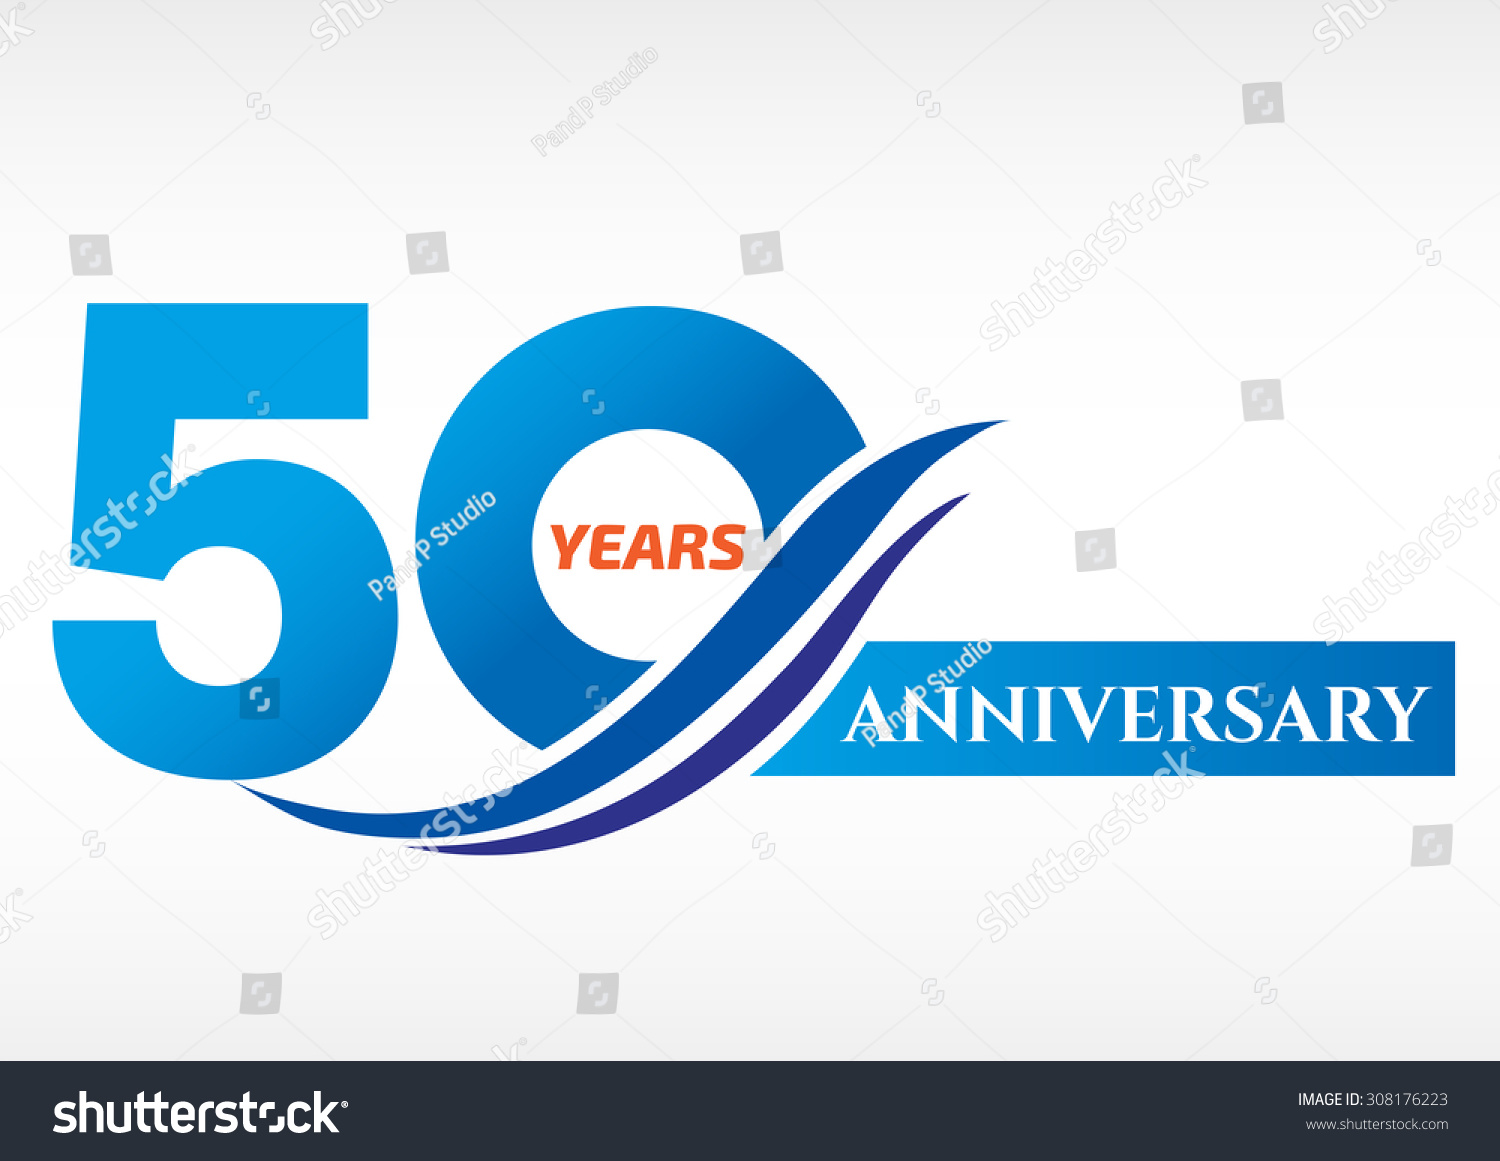 50 Years Anniversary Template Logo Stock Vector Illustration 308176223 ...